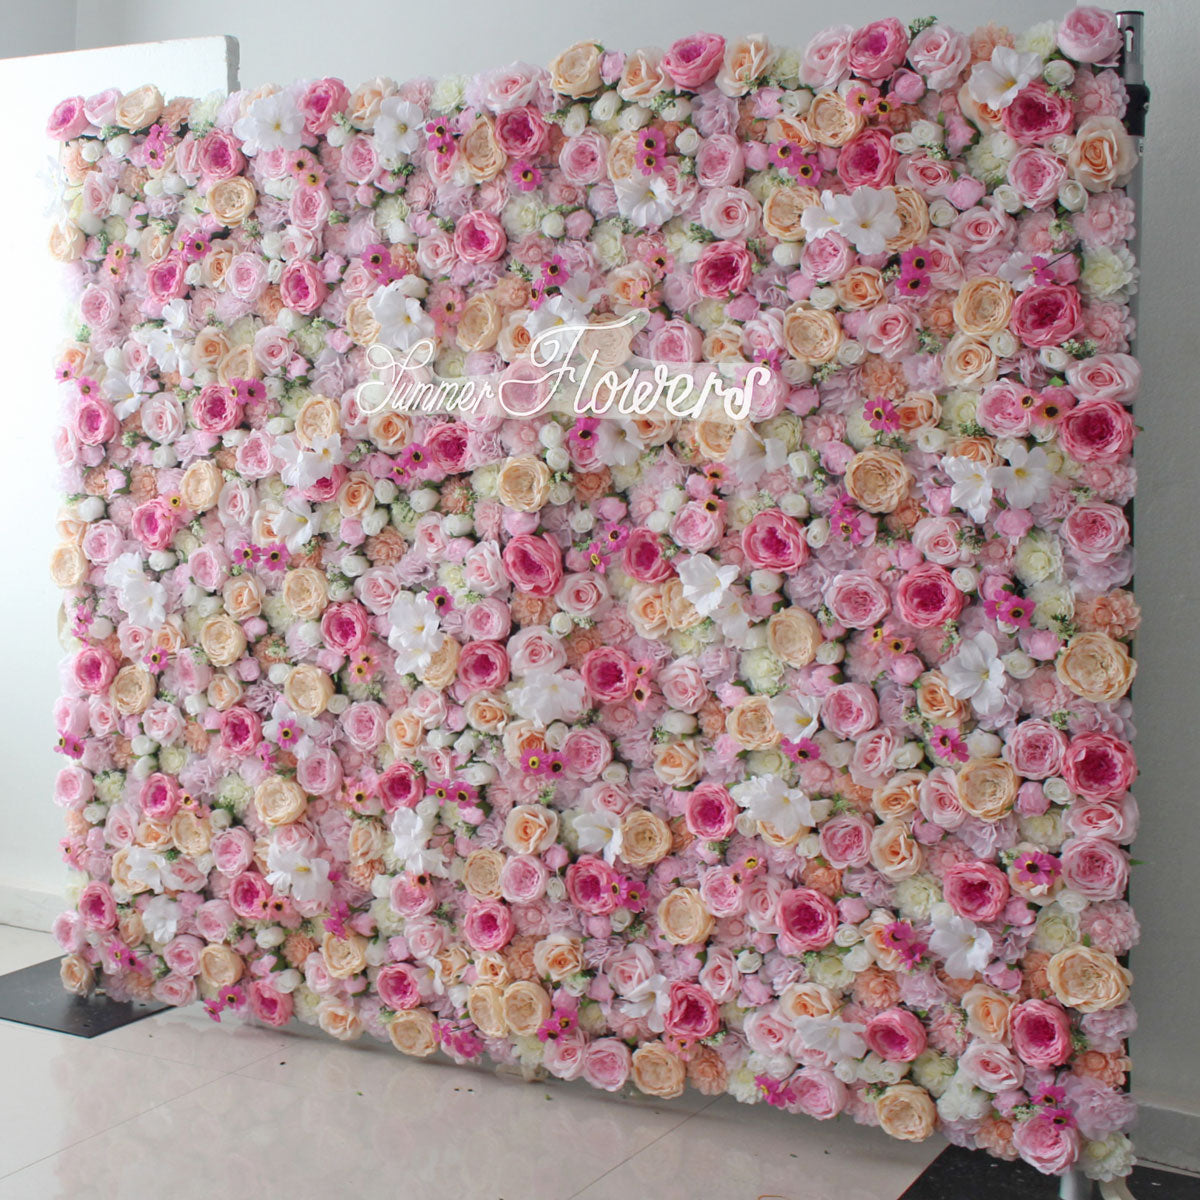 Summer Flower:CB-184 8ft*8ft Cloth Back Artificial Flower Wall Backdrop